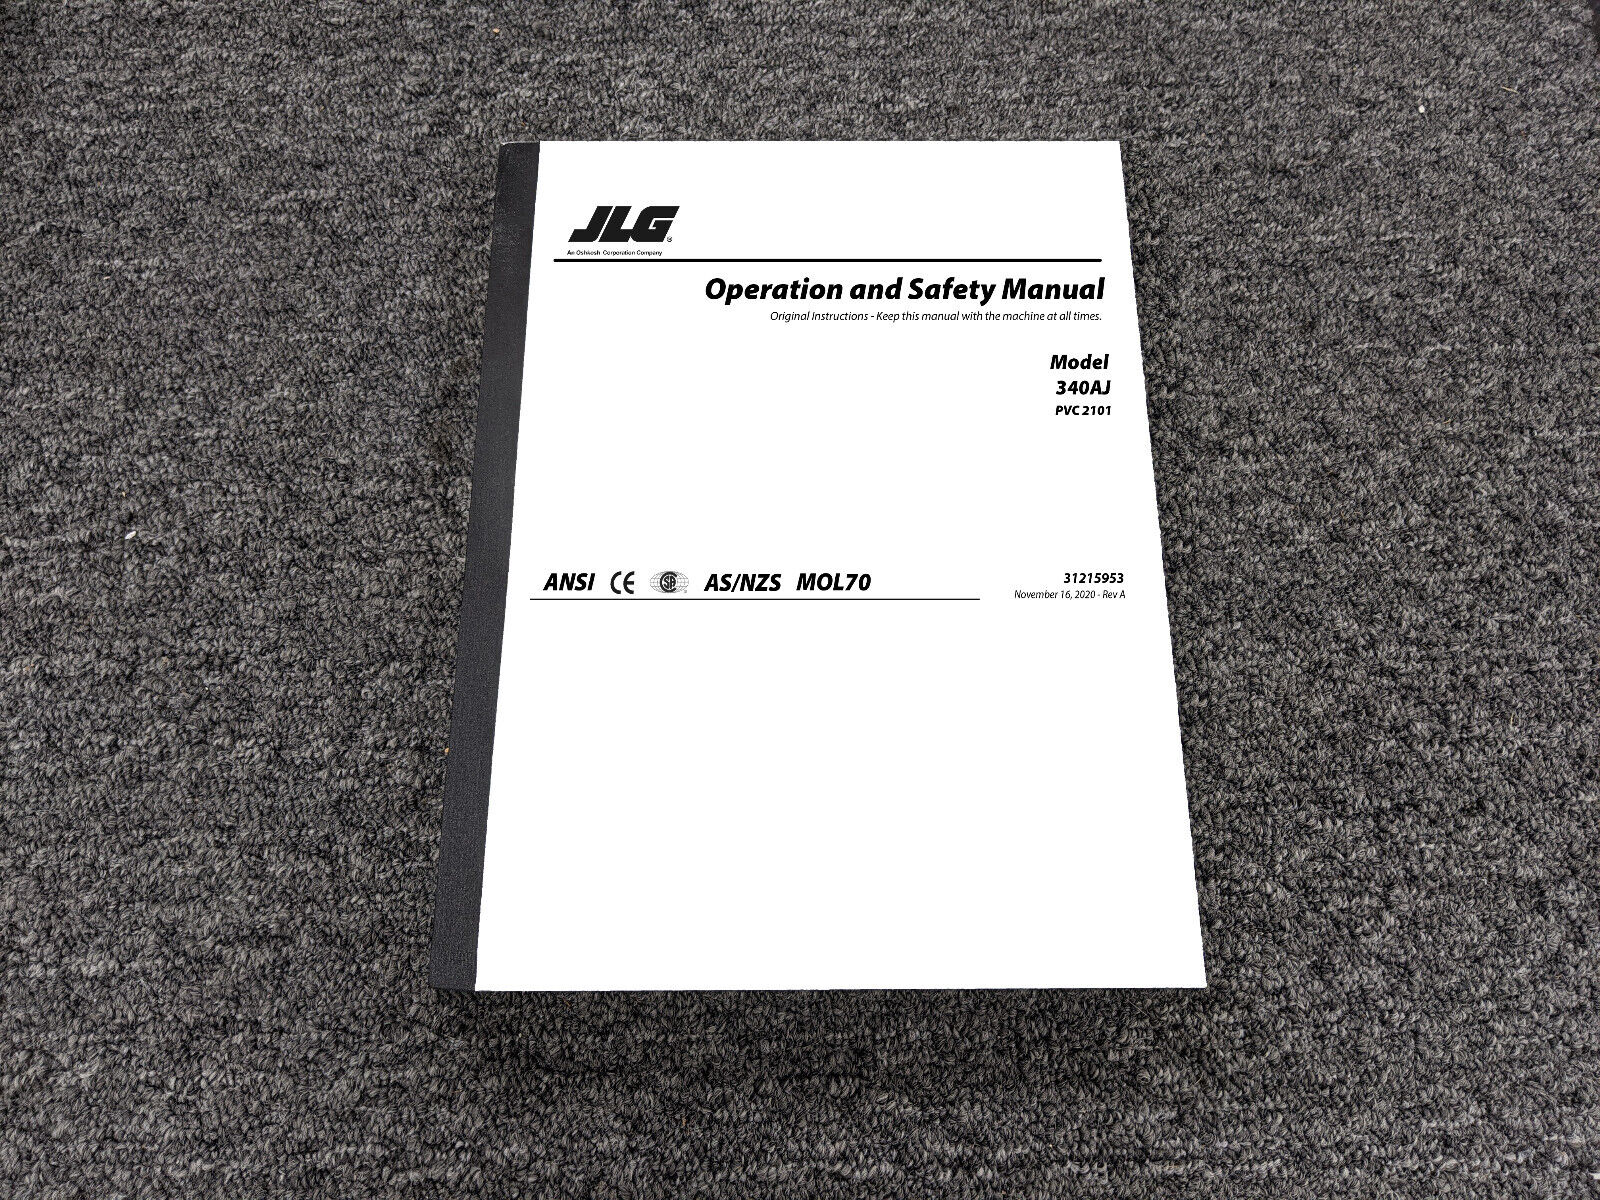 JLG 340AJ Boom Lift PVC 2101 Safety Owner Operator Manual User Guide 31215953